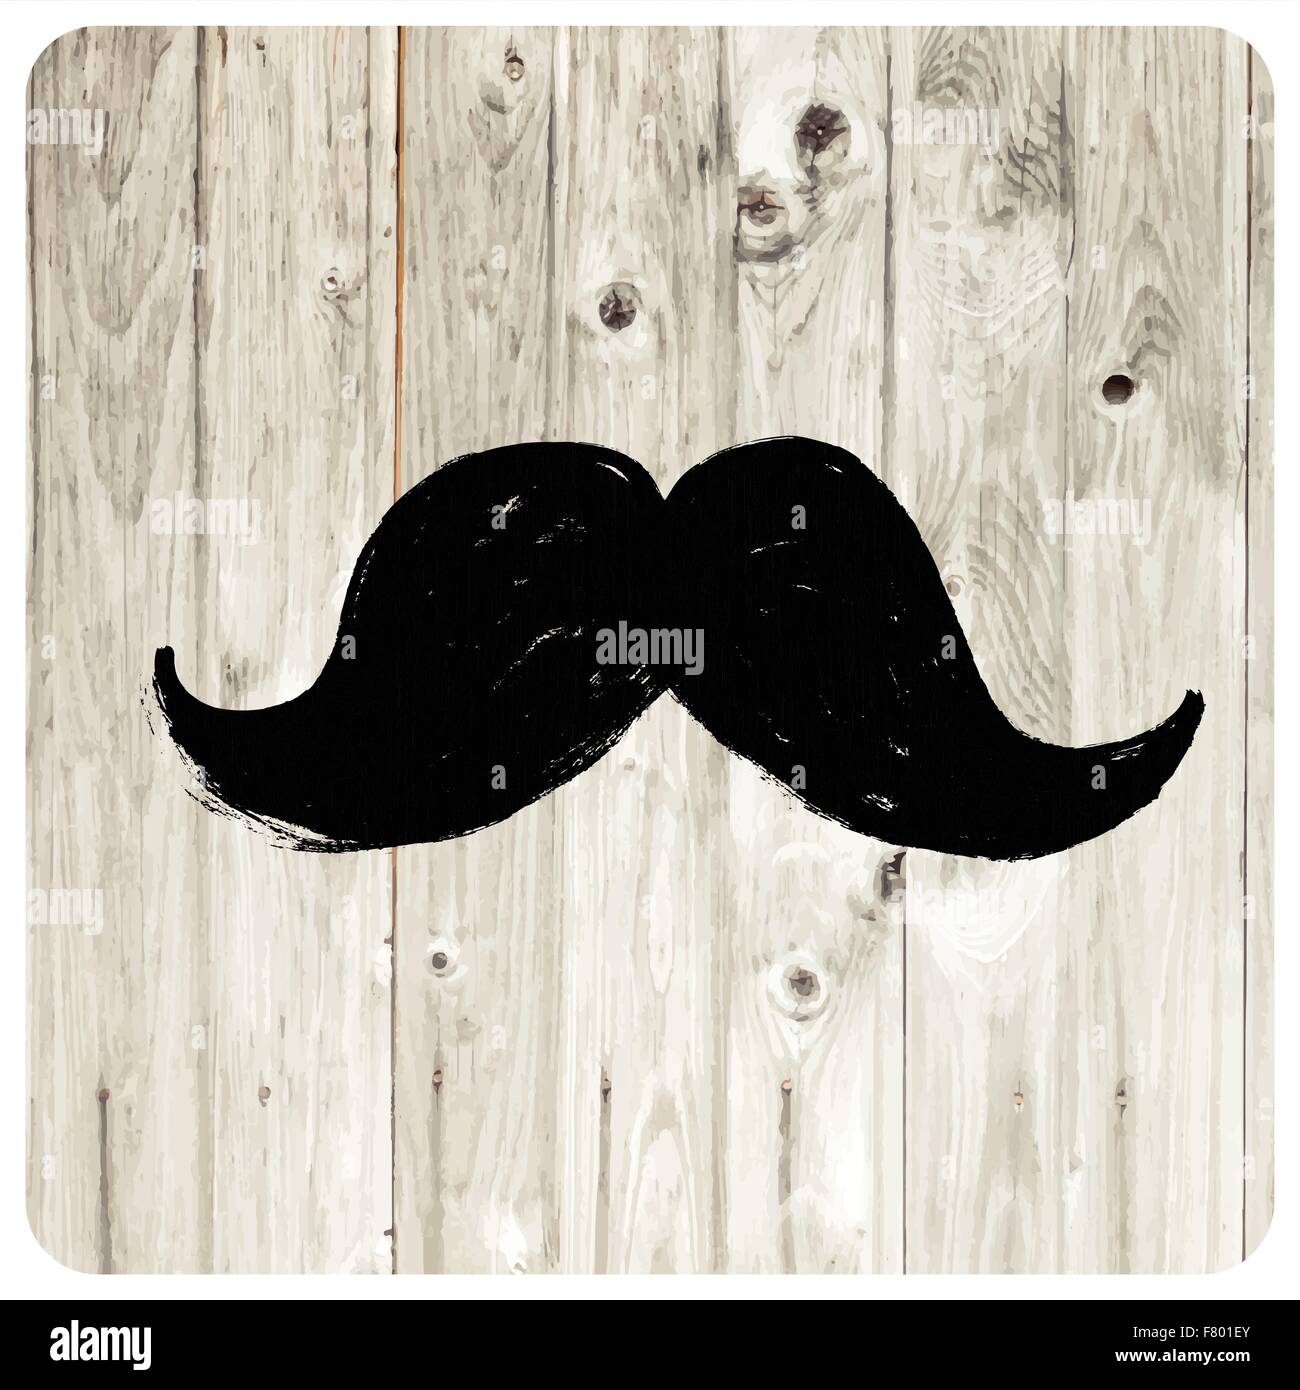 Moustache symbol on wooden texture. Stock Vector